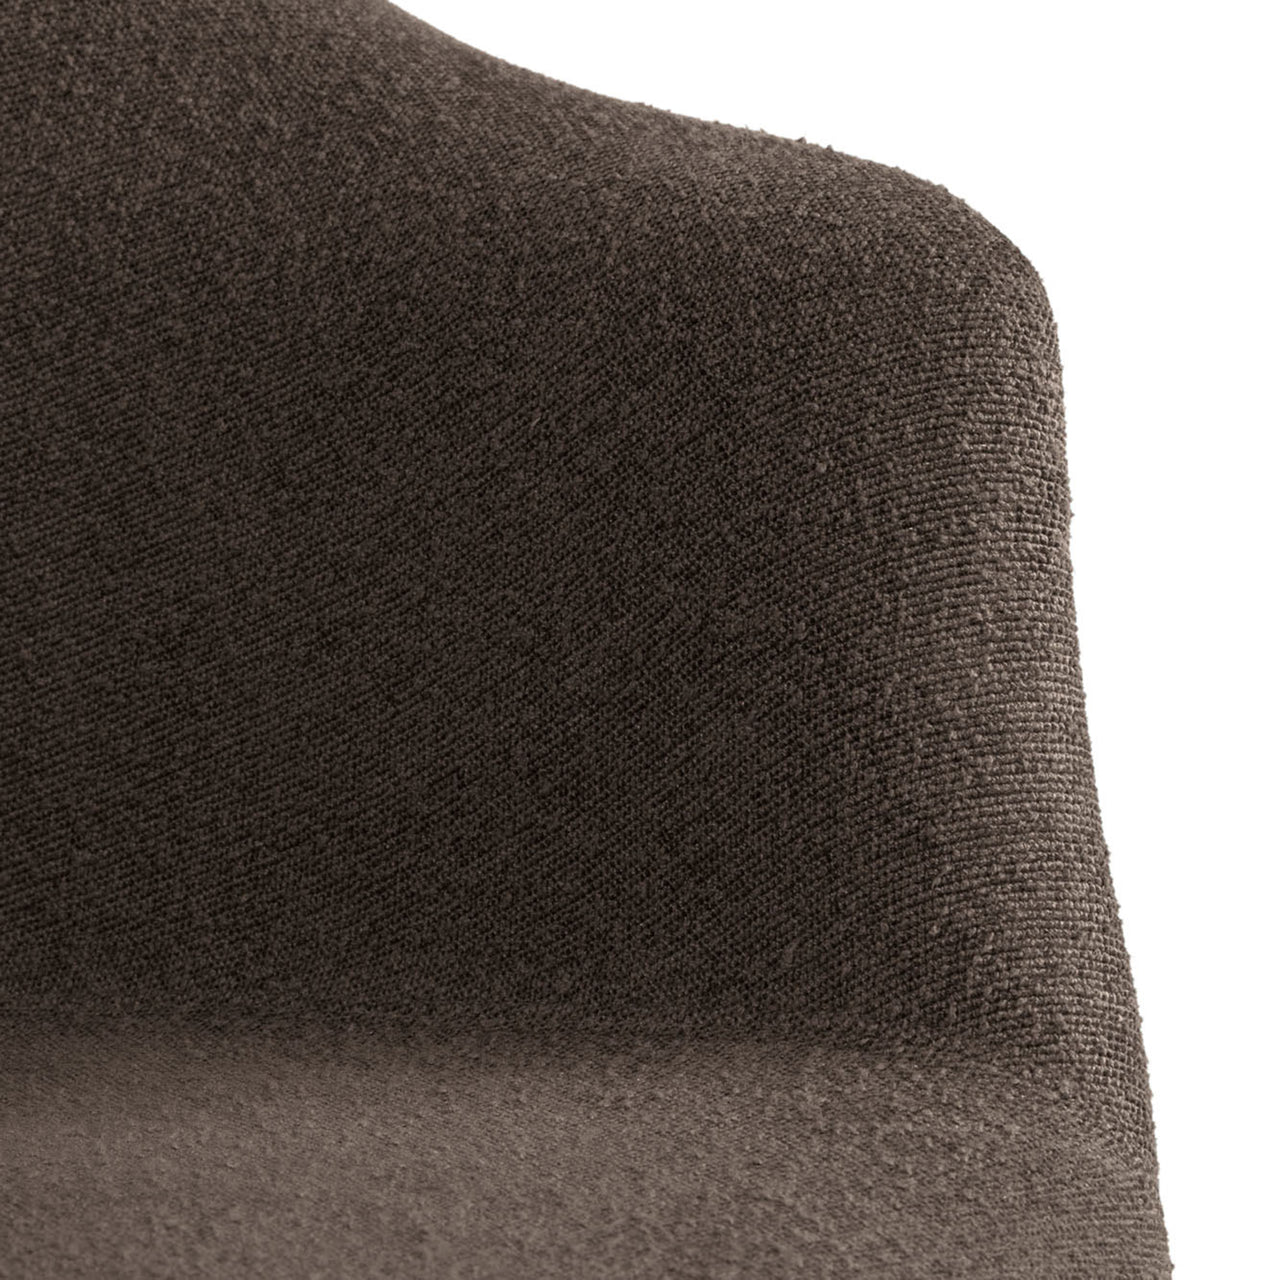 Bat Dining Chair: Black Plastic Base + Fully Upholstered